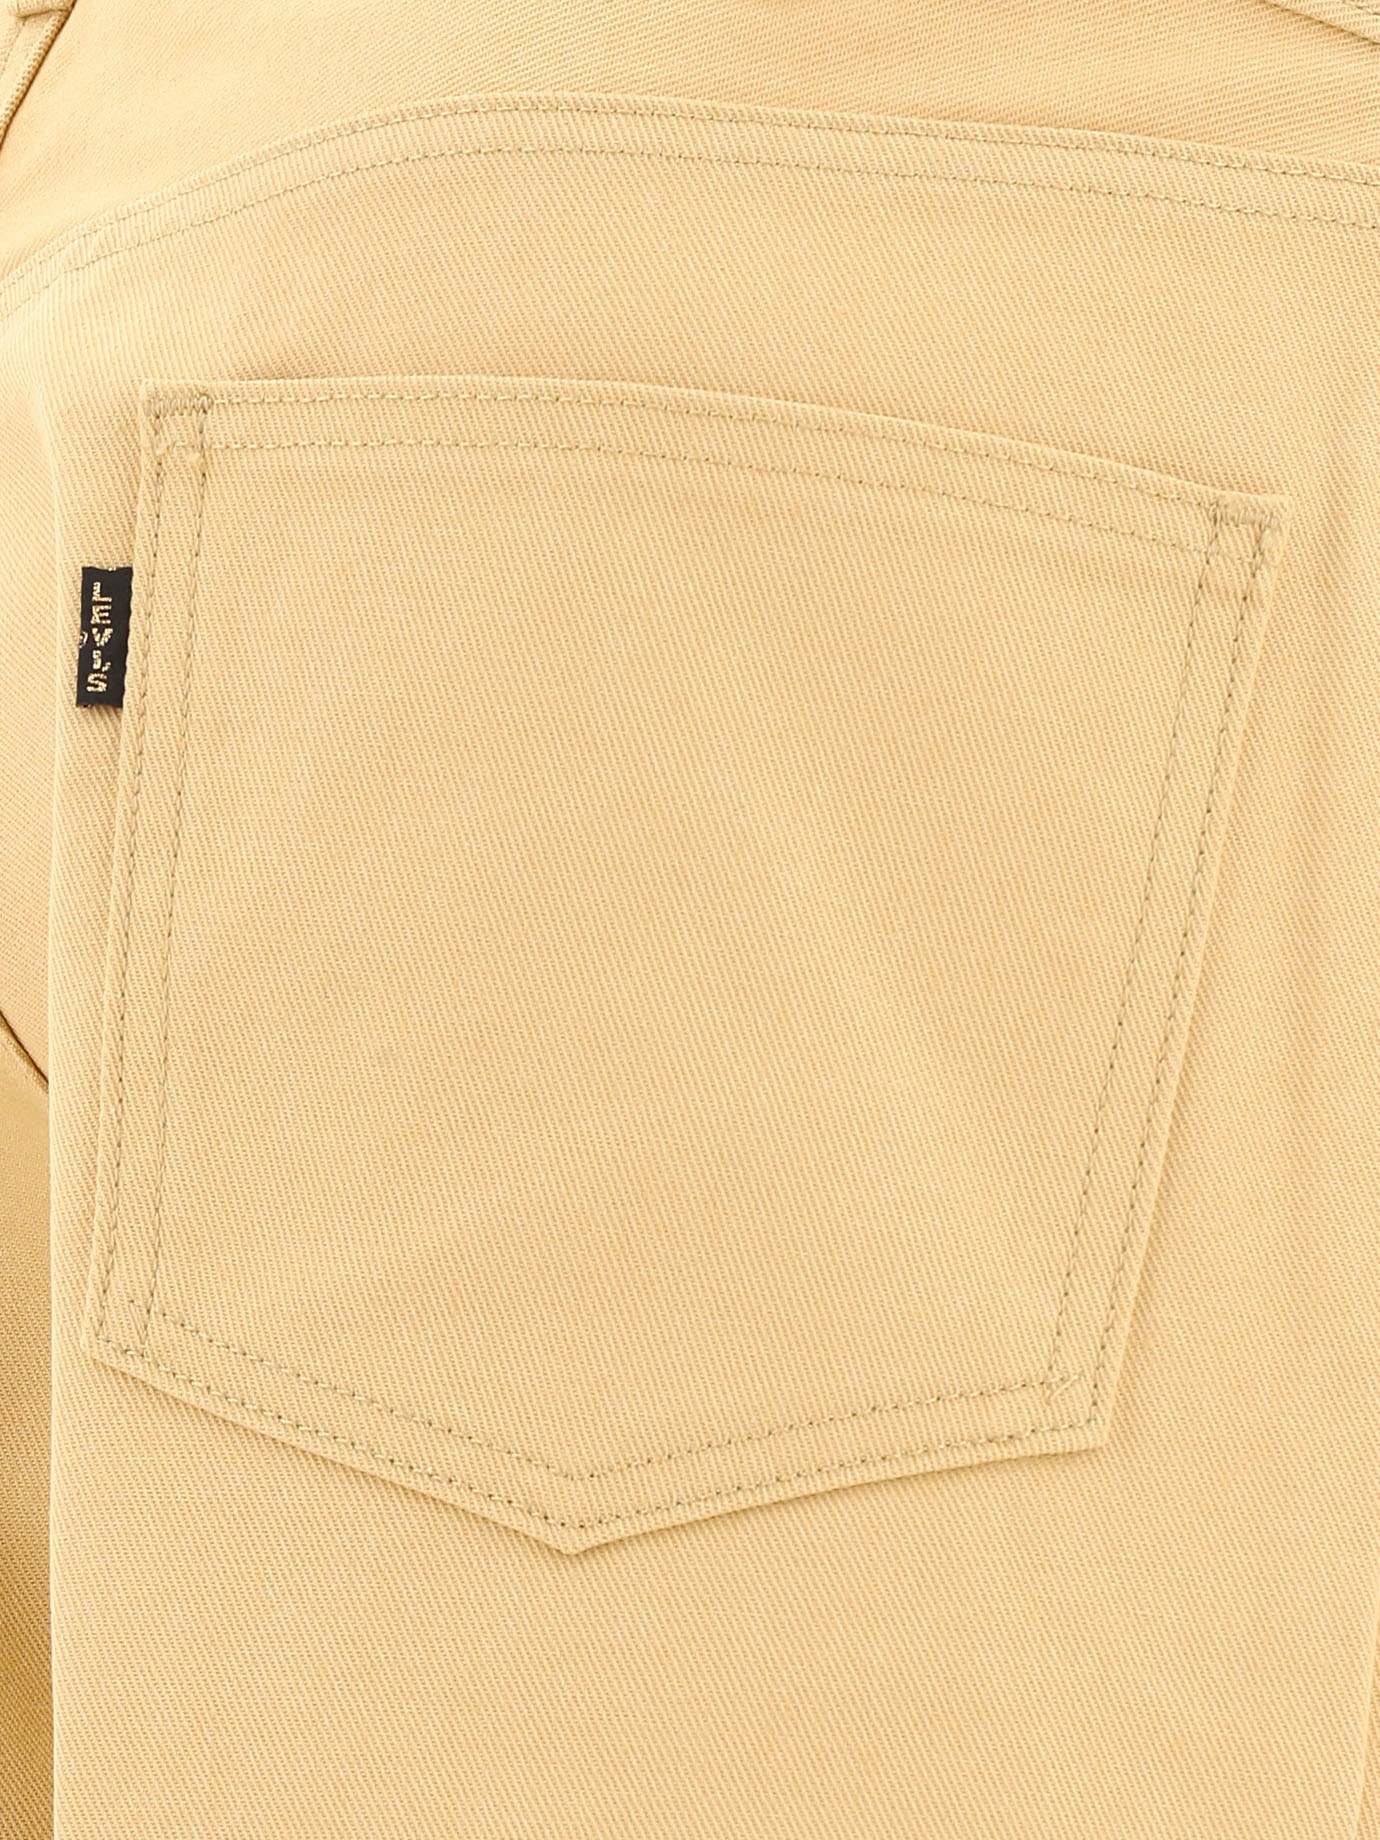 Jeans  Sta-prest  by Levi's Vintage Clothing